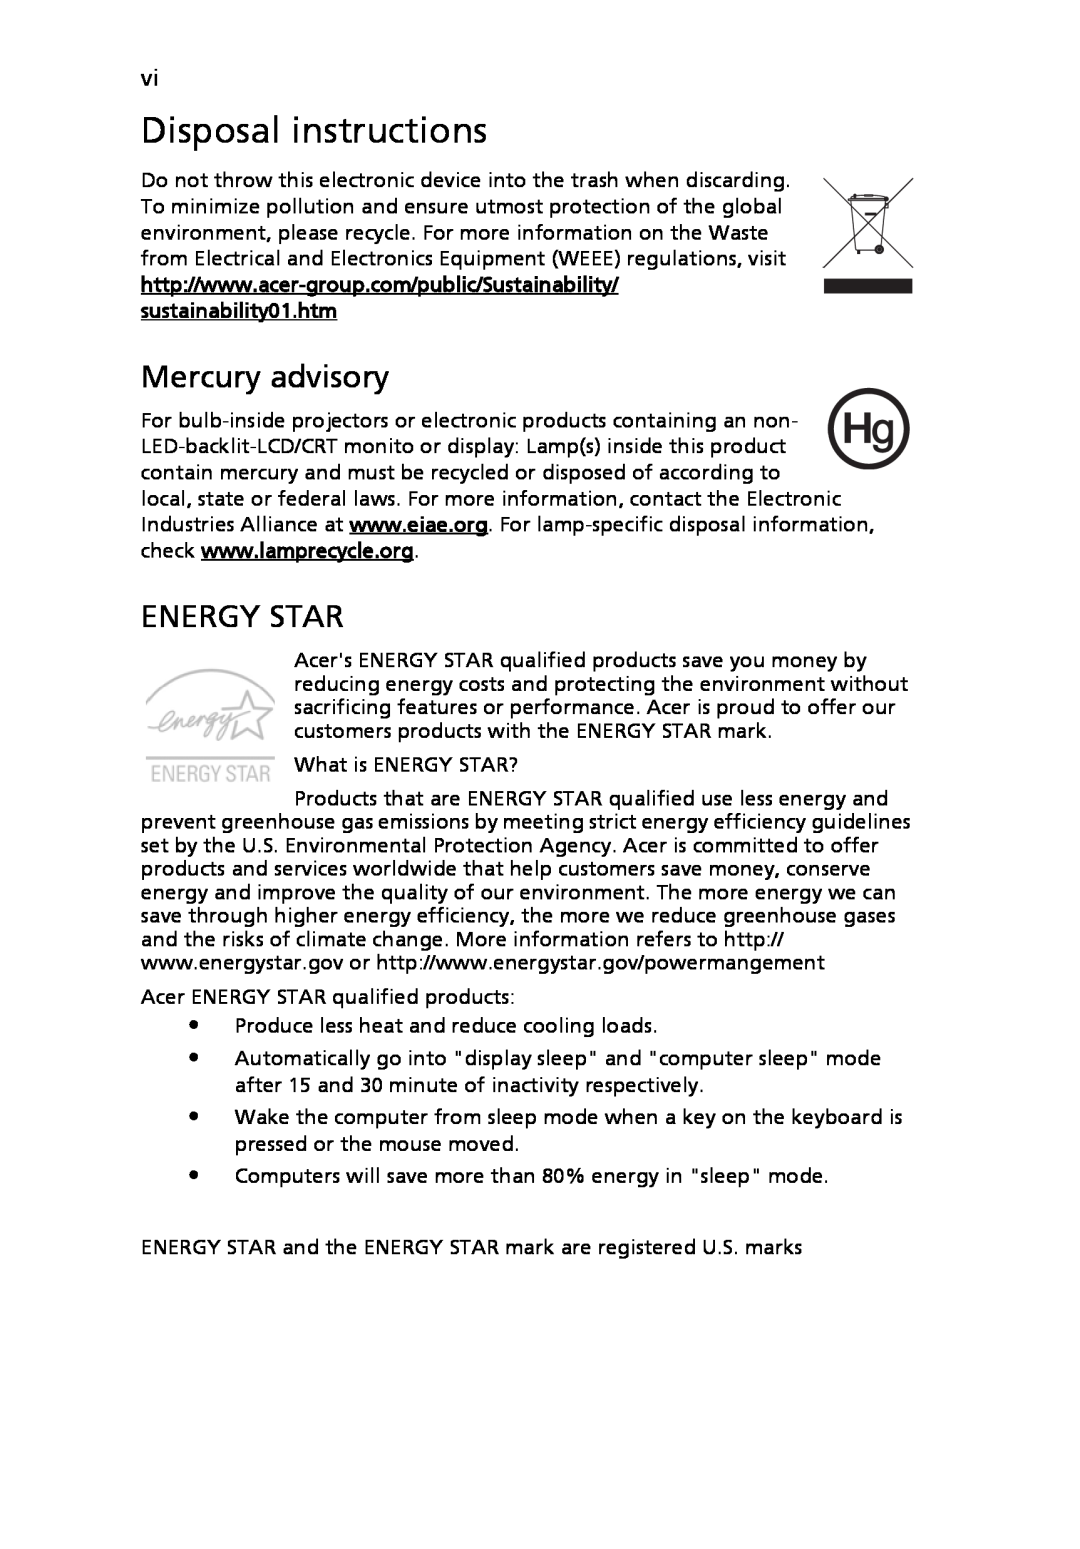 Acer N260G manual Disposal instructions, Mercury advisory, Energy Star 